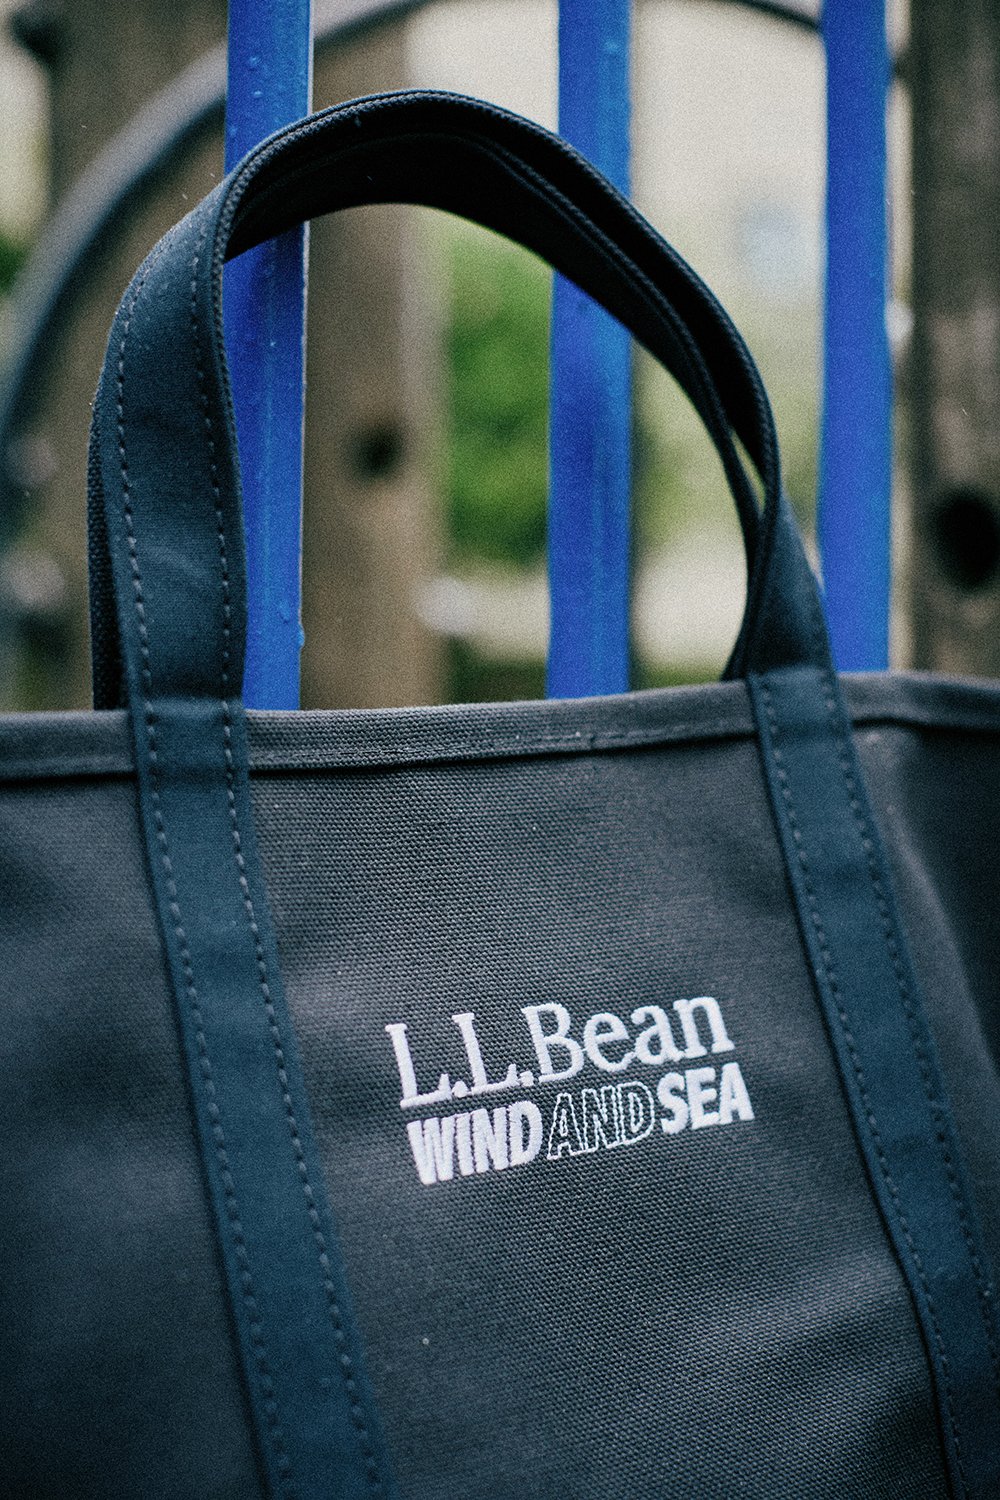 WIND AND SEAとL.L.Beanによるコラボレートコレクション